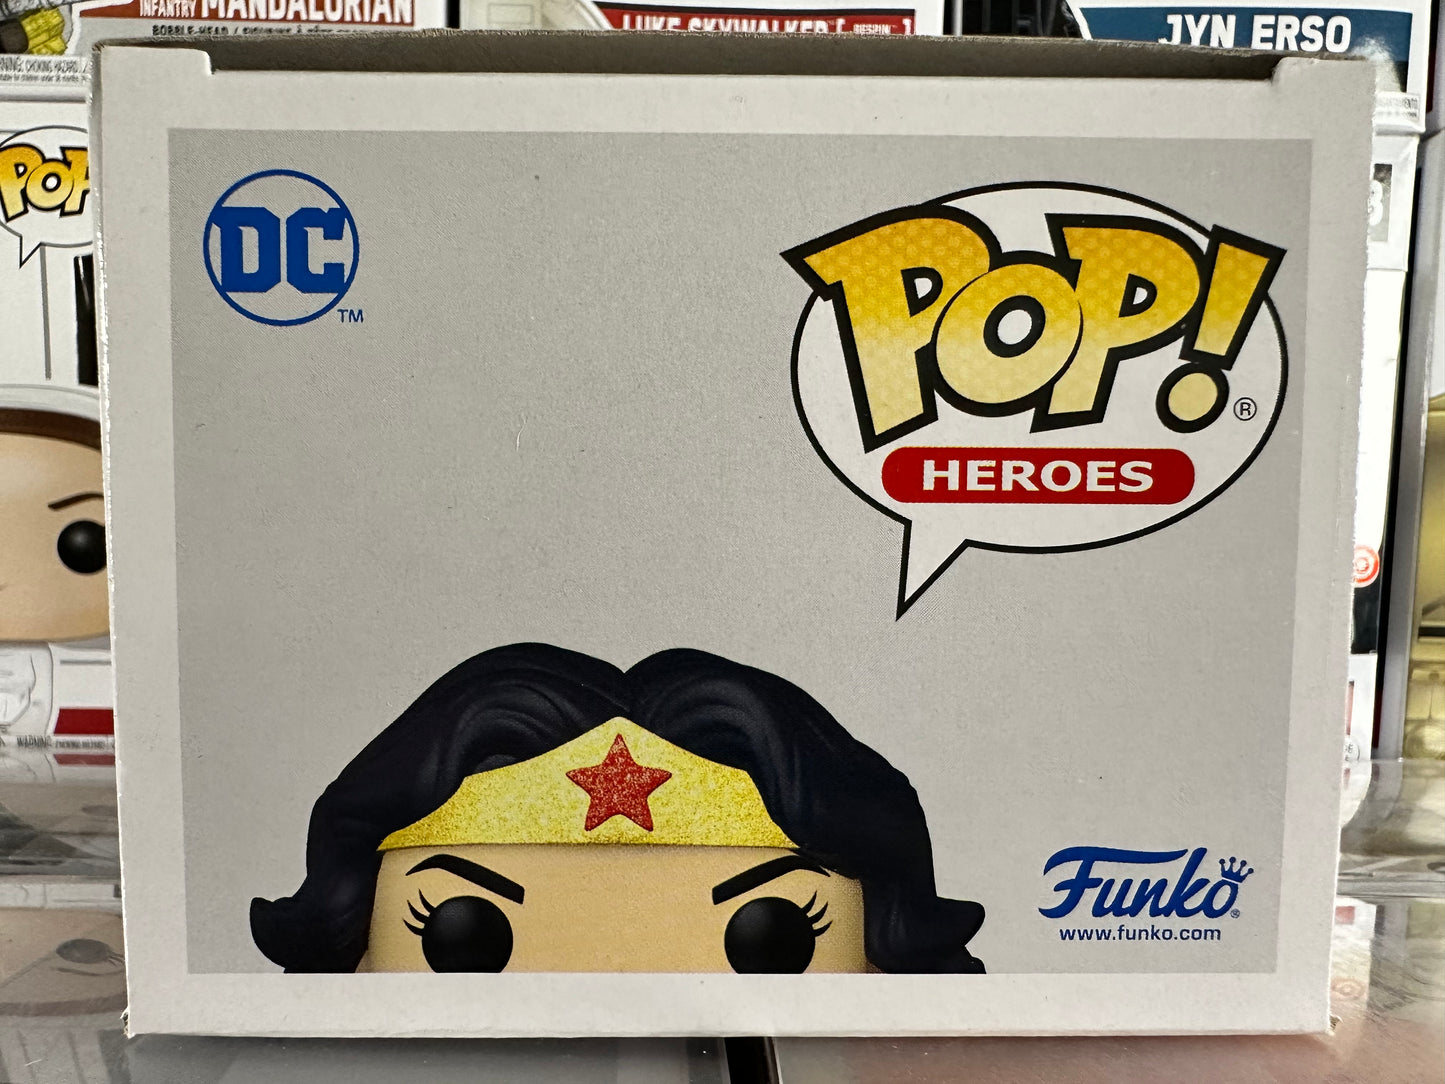 DC Wonder Woman - Classic Wonder Woman With Cape (Diamond) (433)